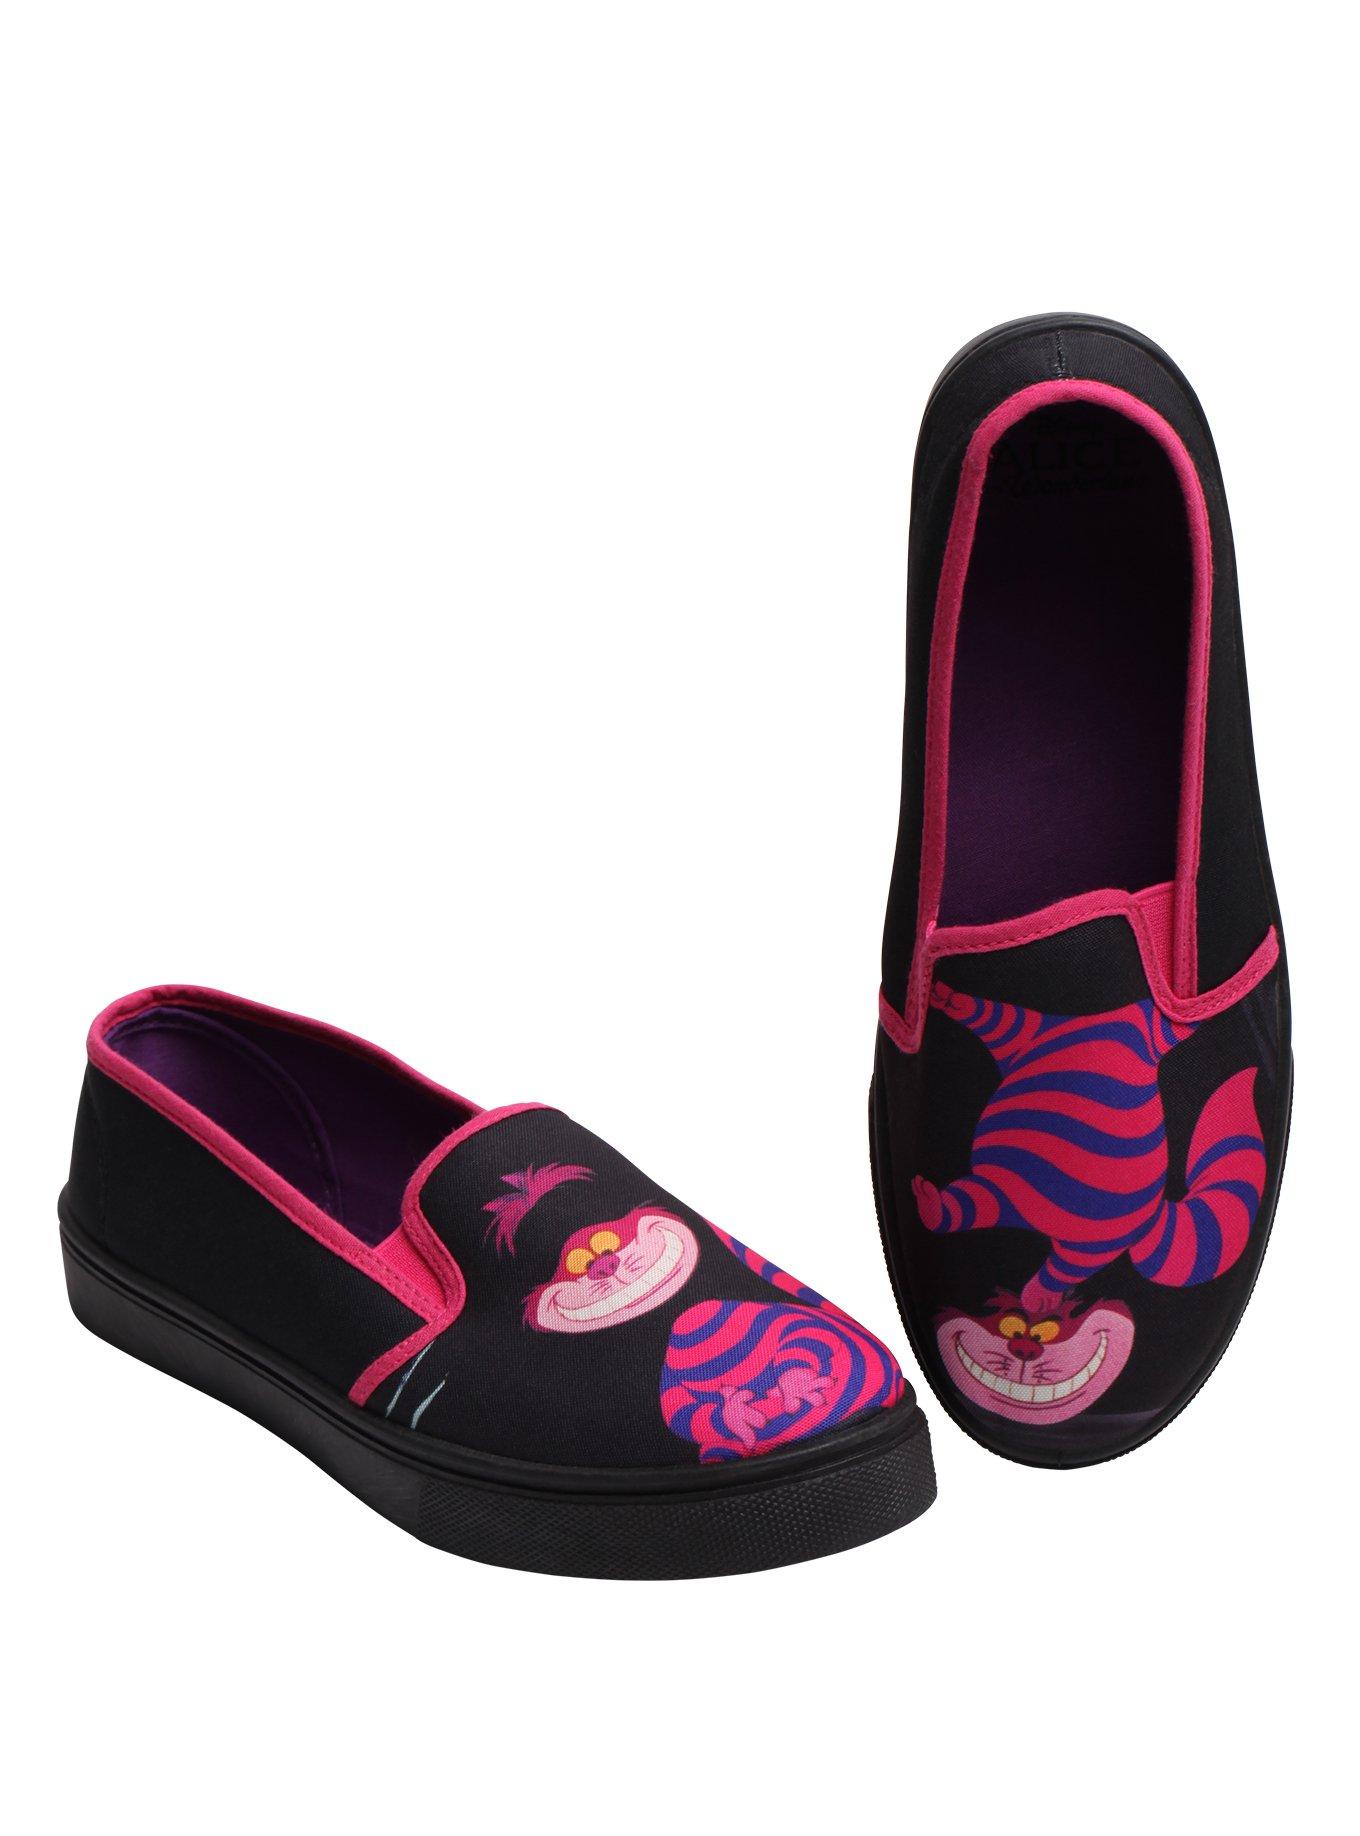 Disney Alice In Wonderland Cheshire Cat Slip-On Sneakers, BLACK, hi-res